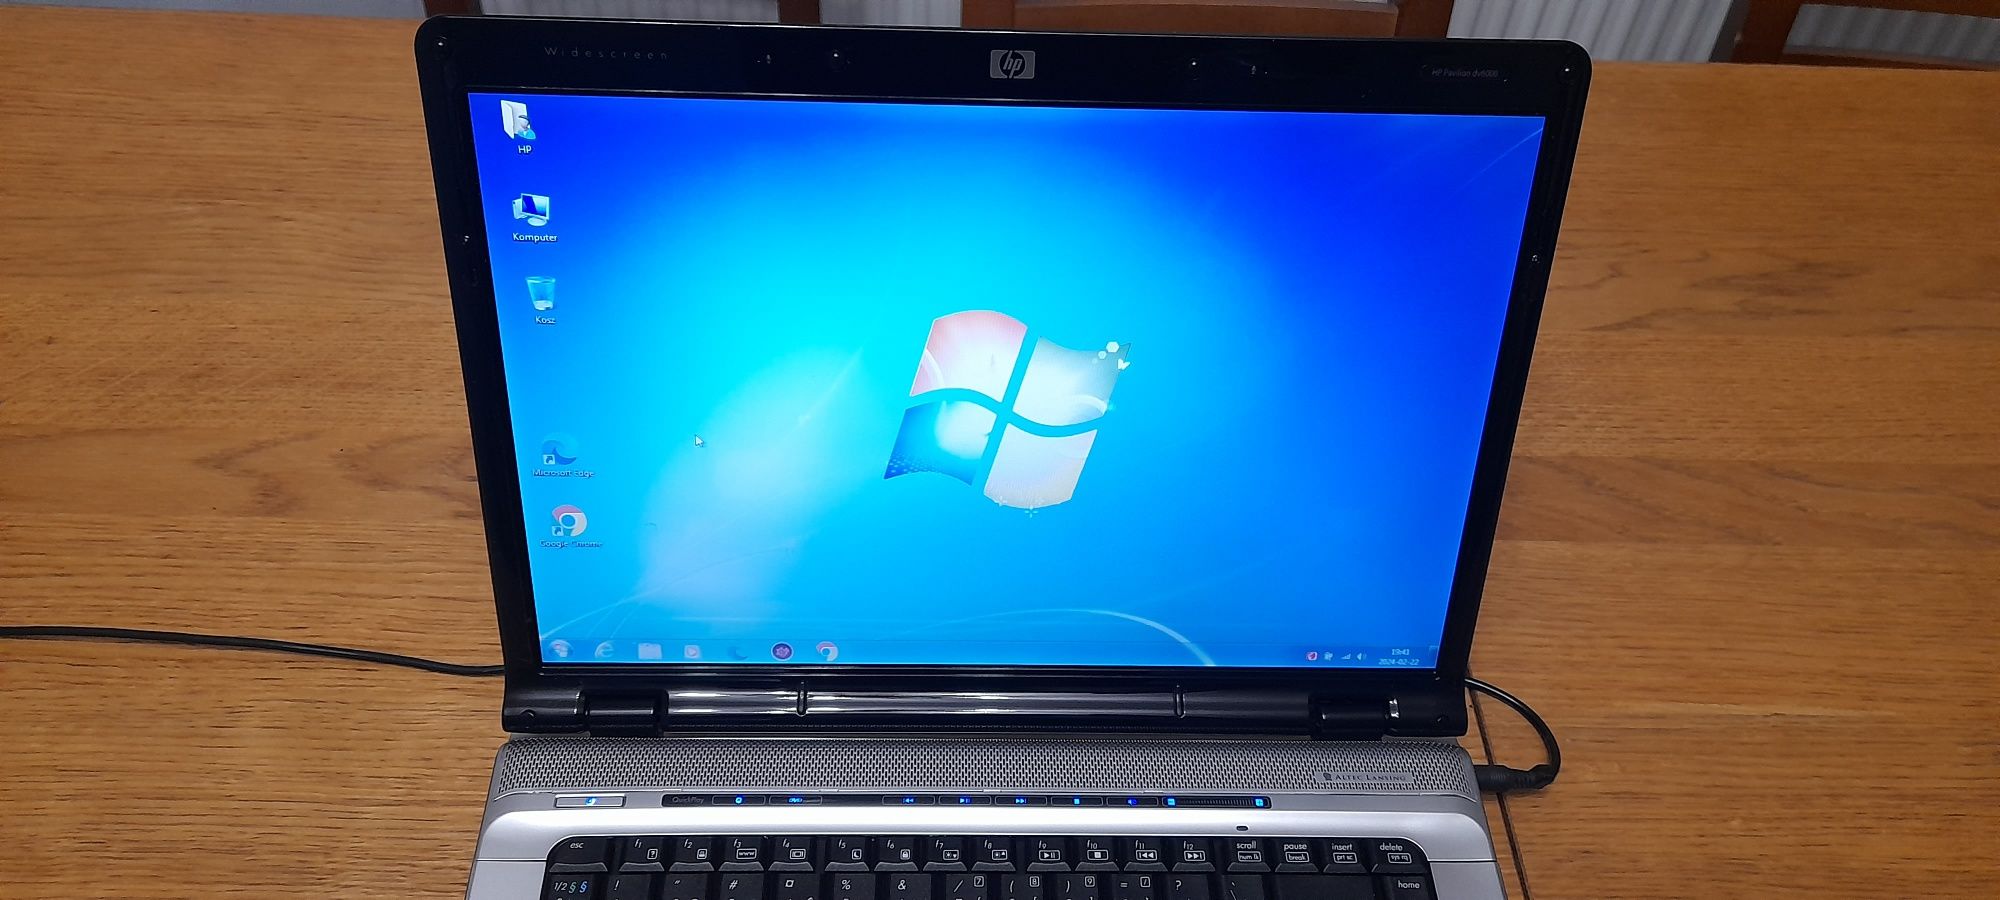 Laptop HP dv6000, 320GB